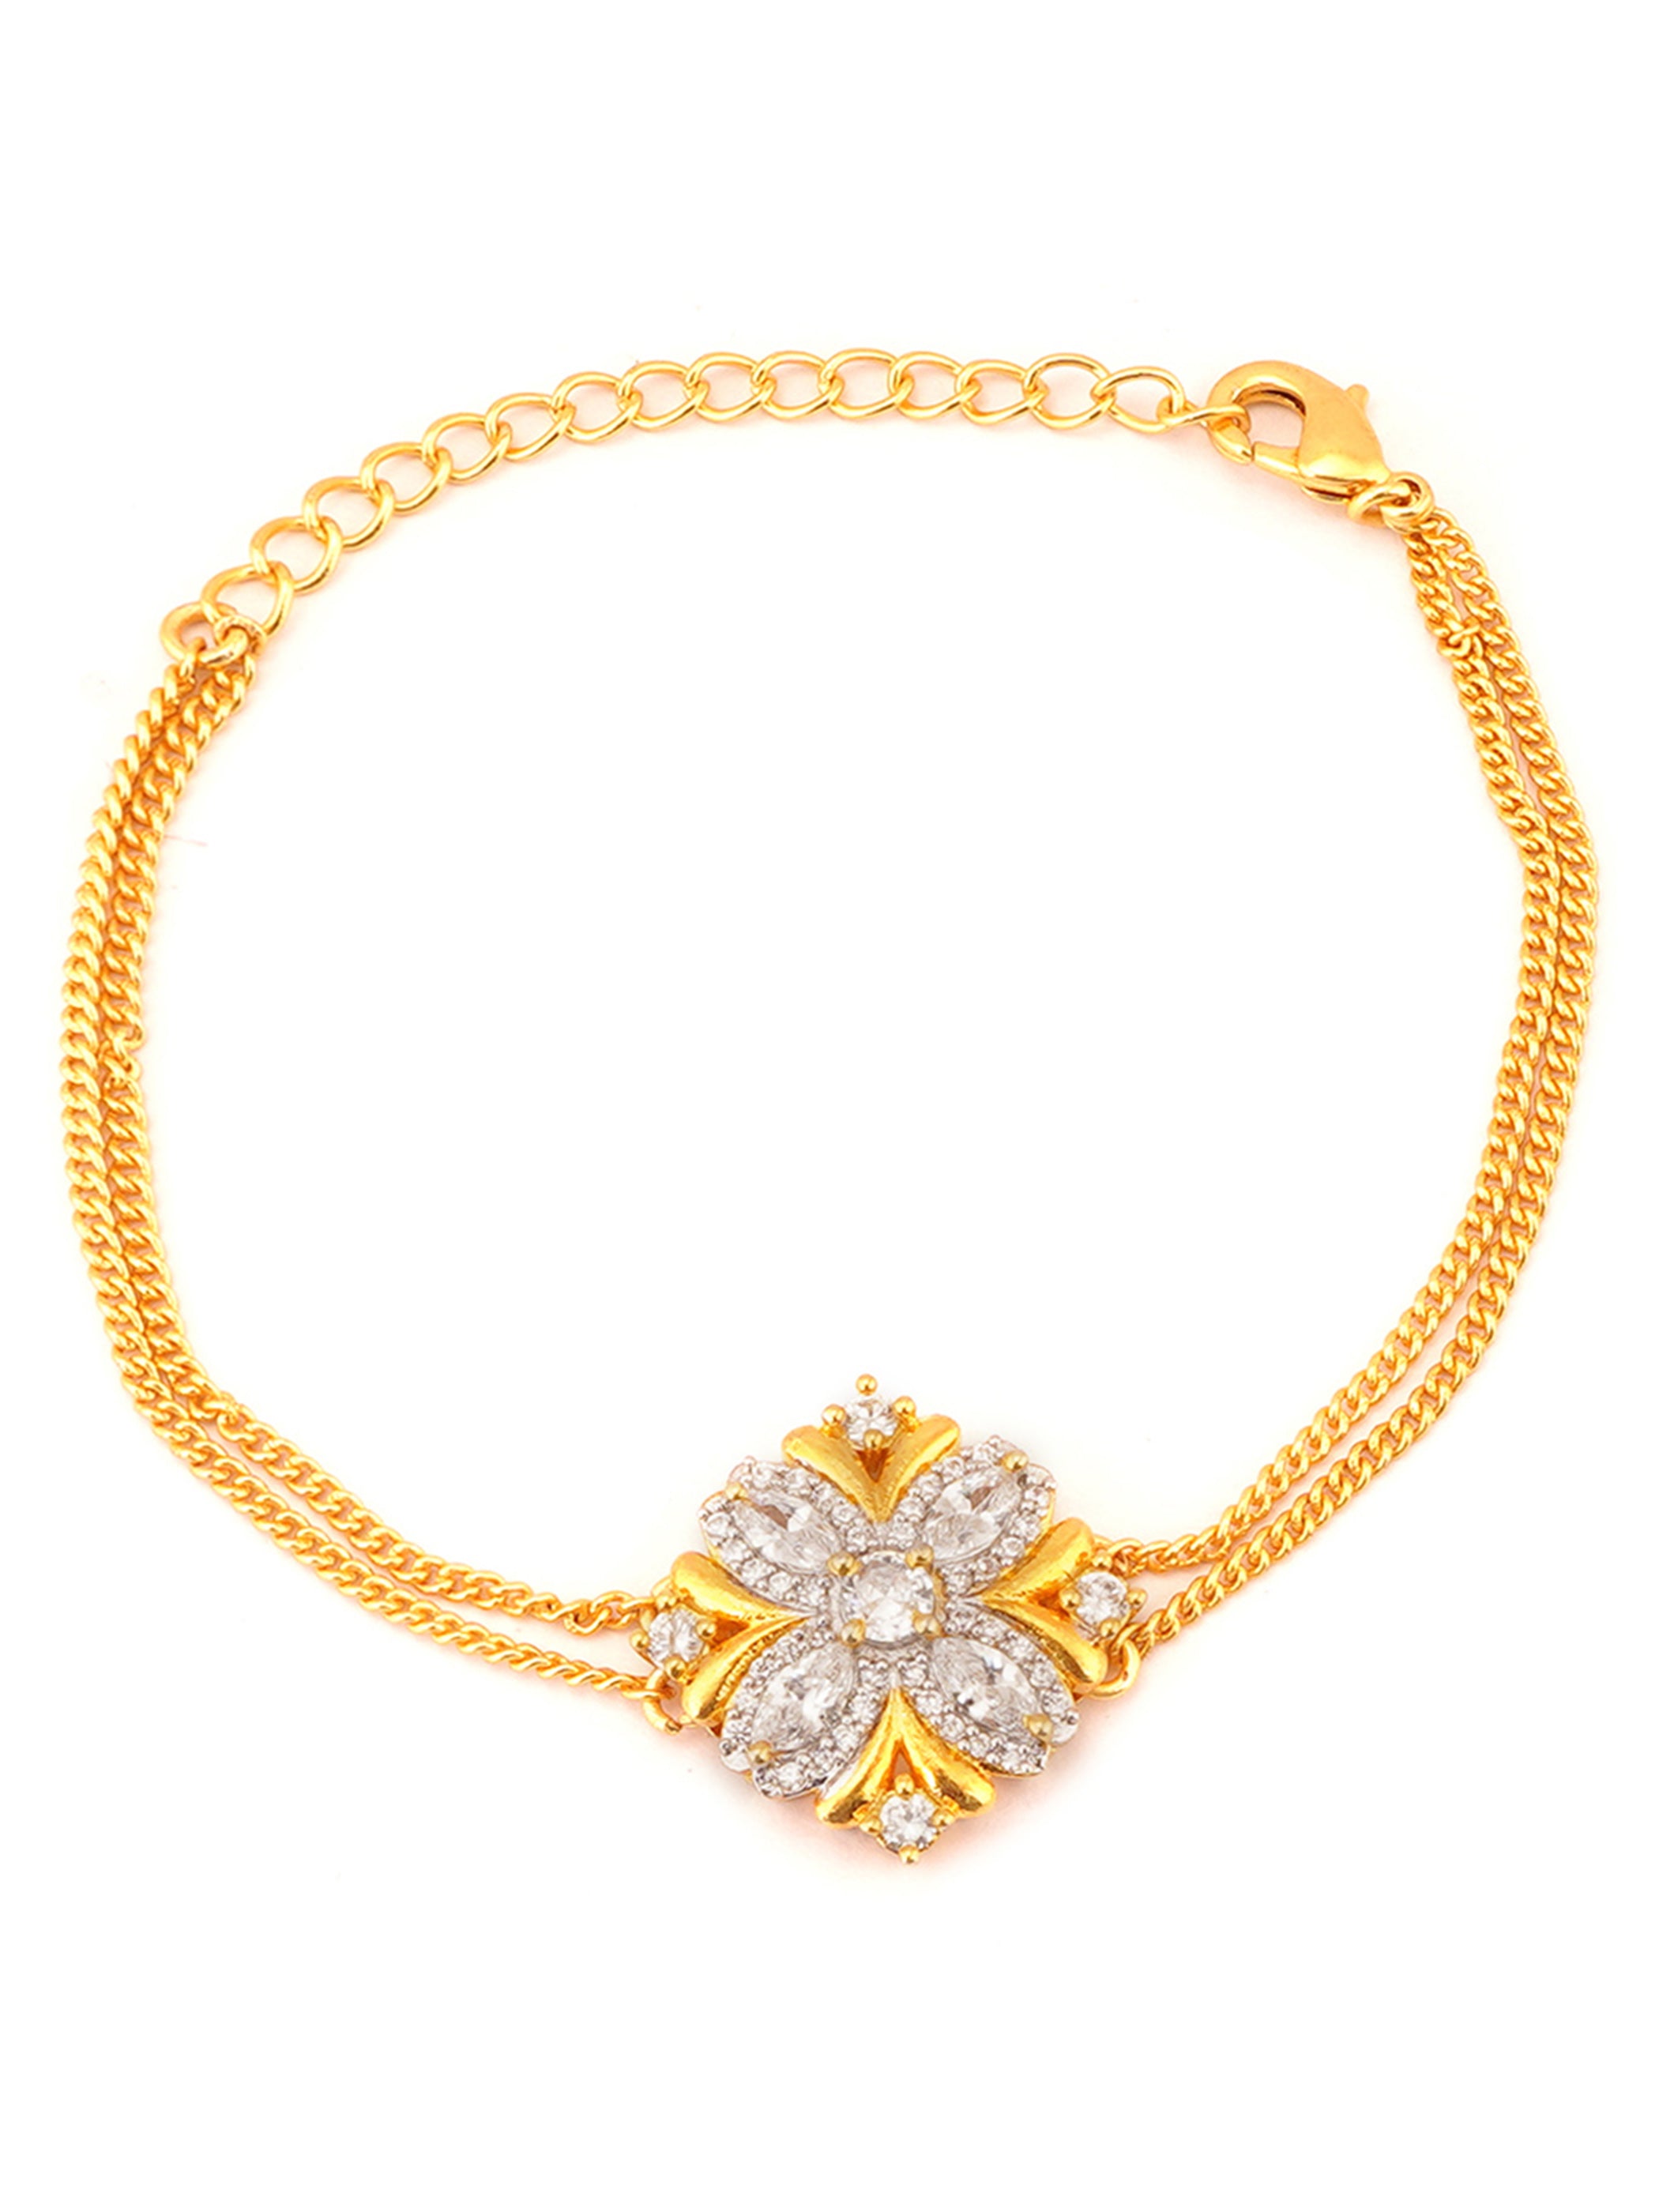 Stunning Design with Diamond Gold Plated Bracelet for Women  Girls    Soni Fashion